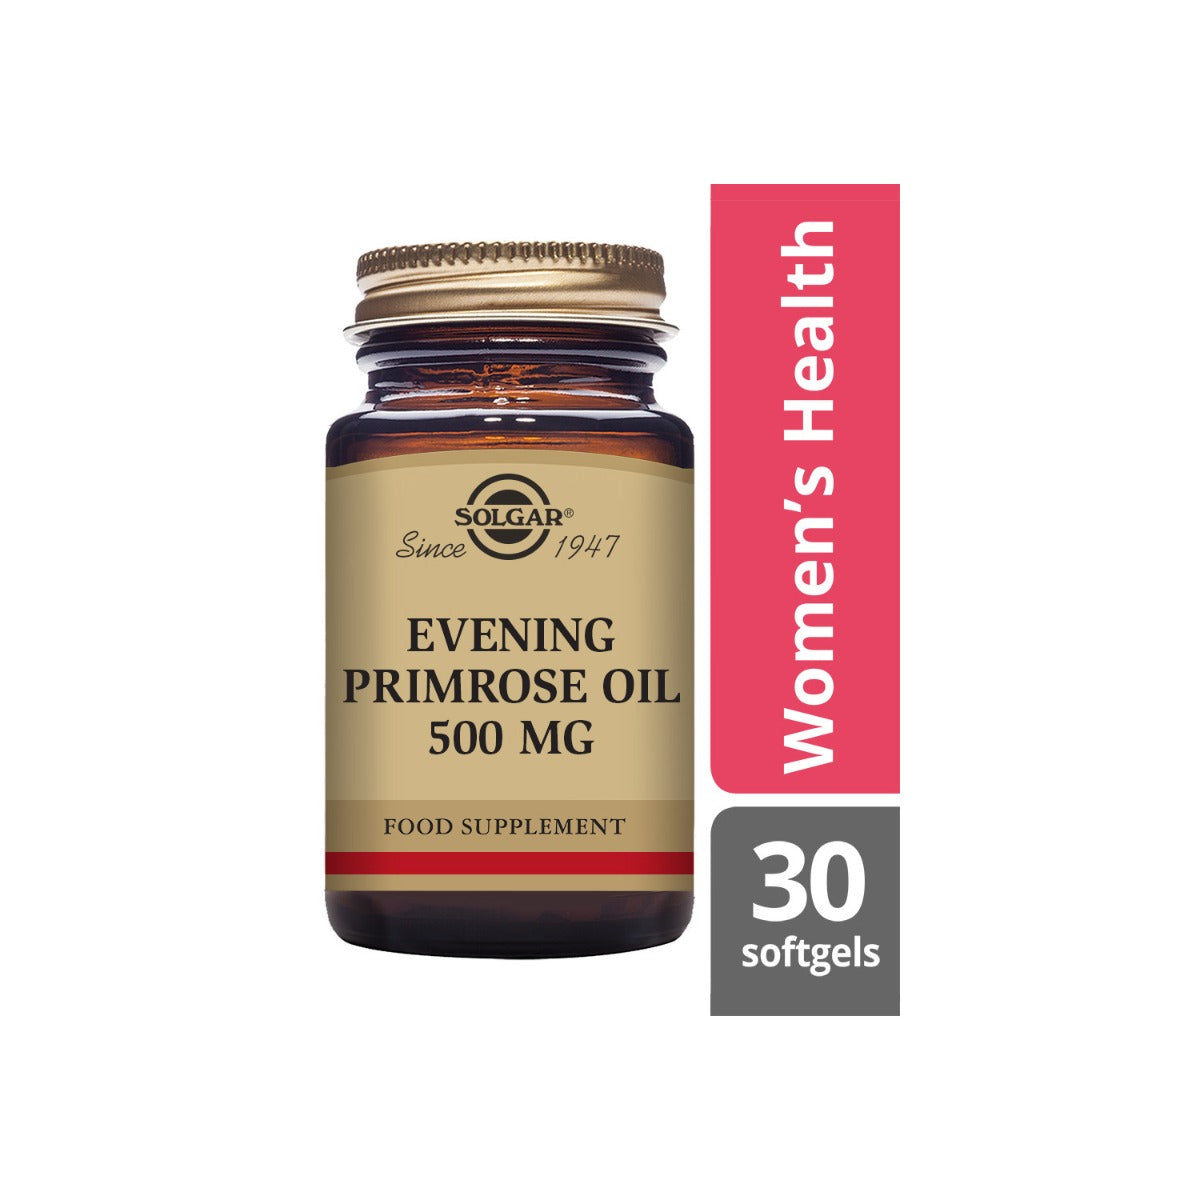 Solgar® Evening Primrose Oil 500 mg Softgels - Pack of 30